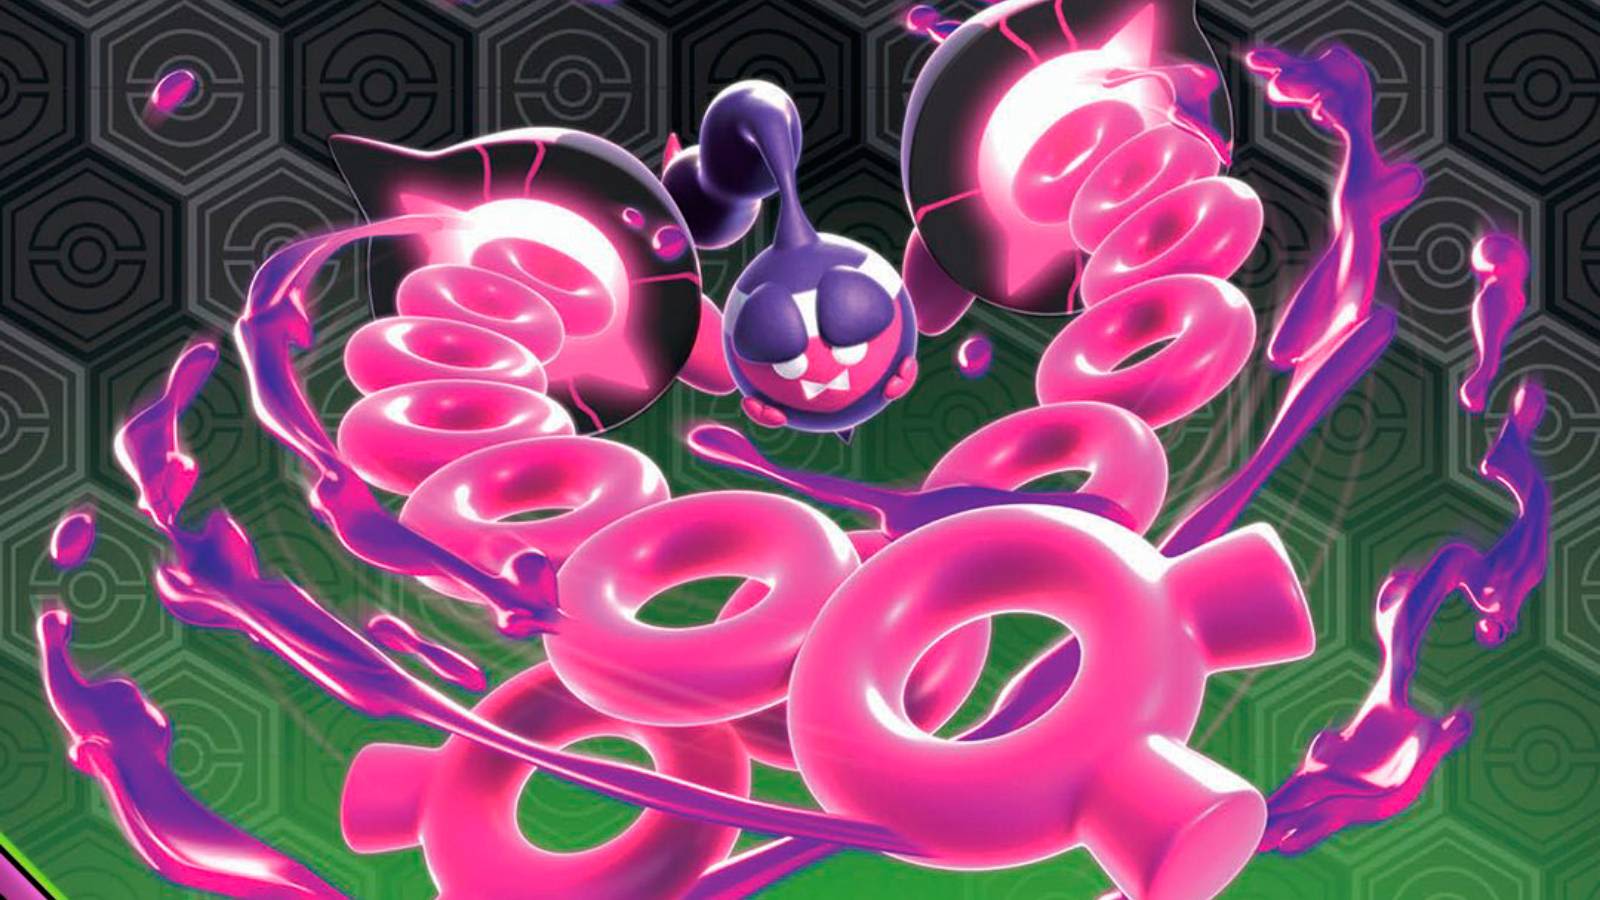 Pecharunt makes Pokemon TCG debut with “sick” new card - Dexerto